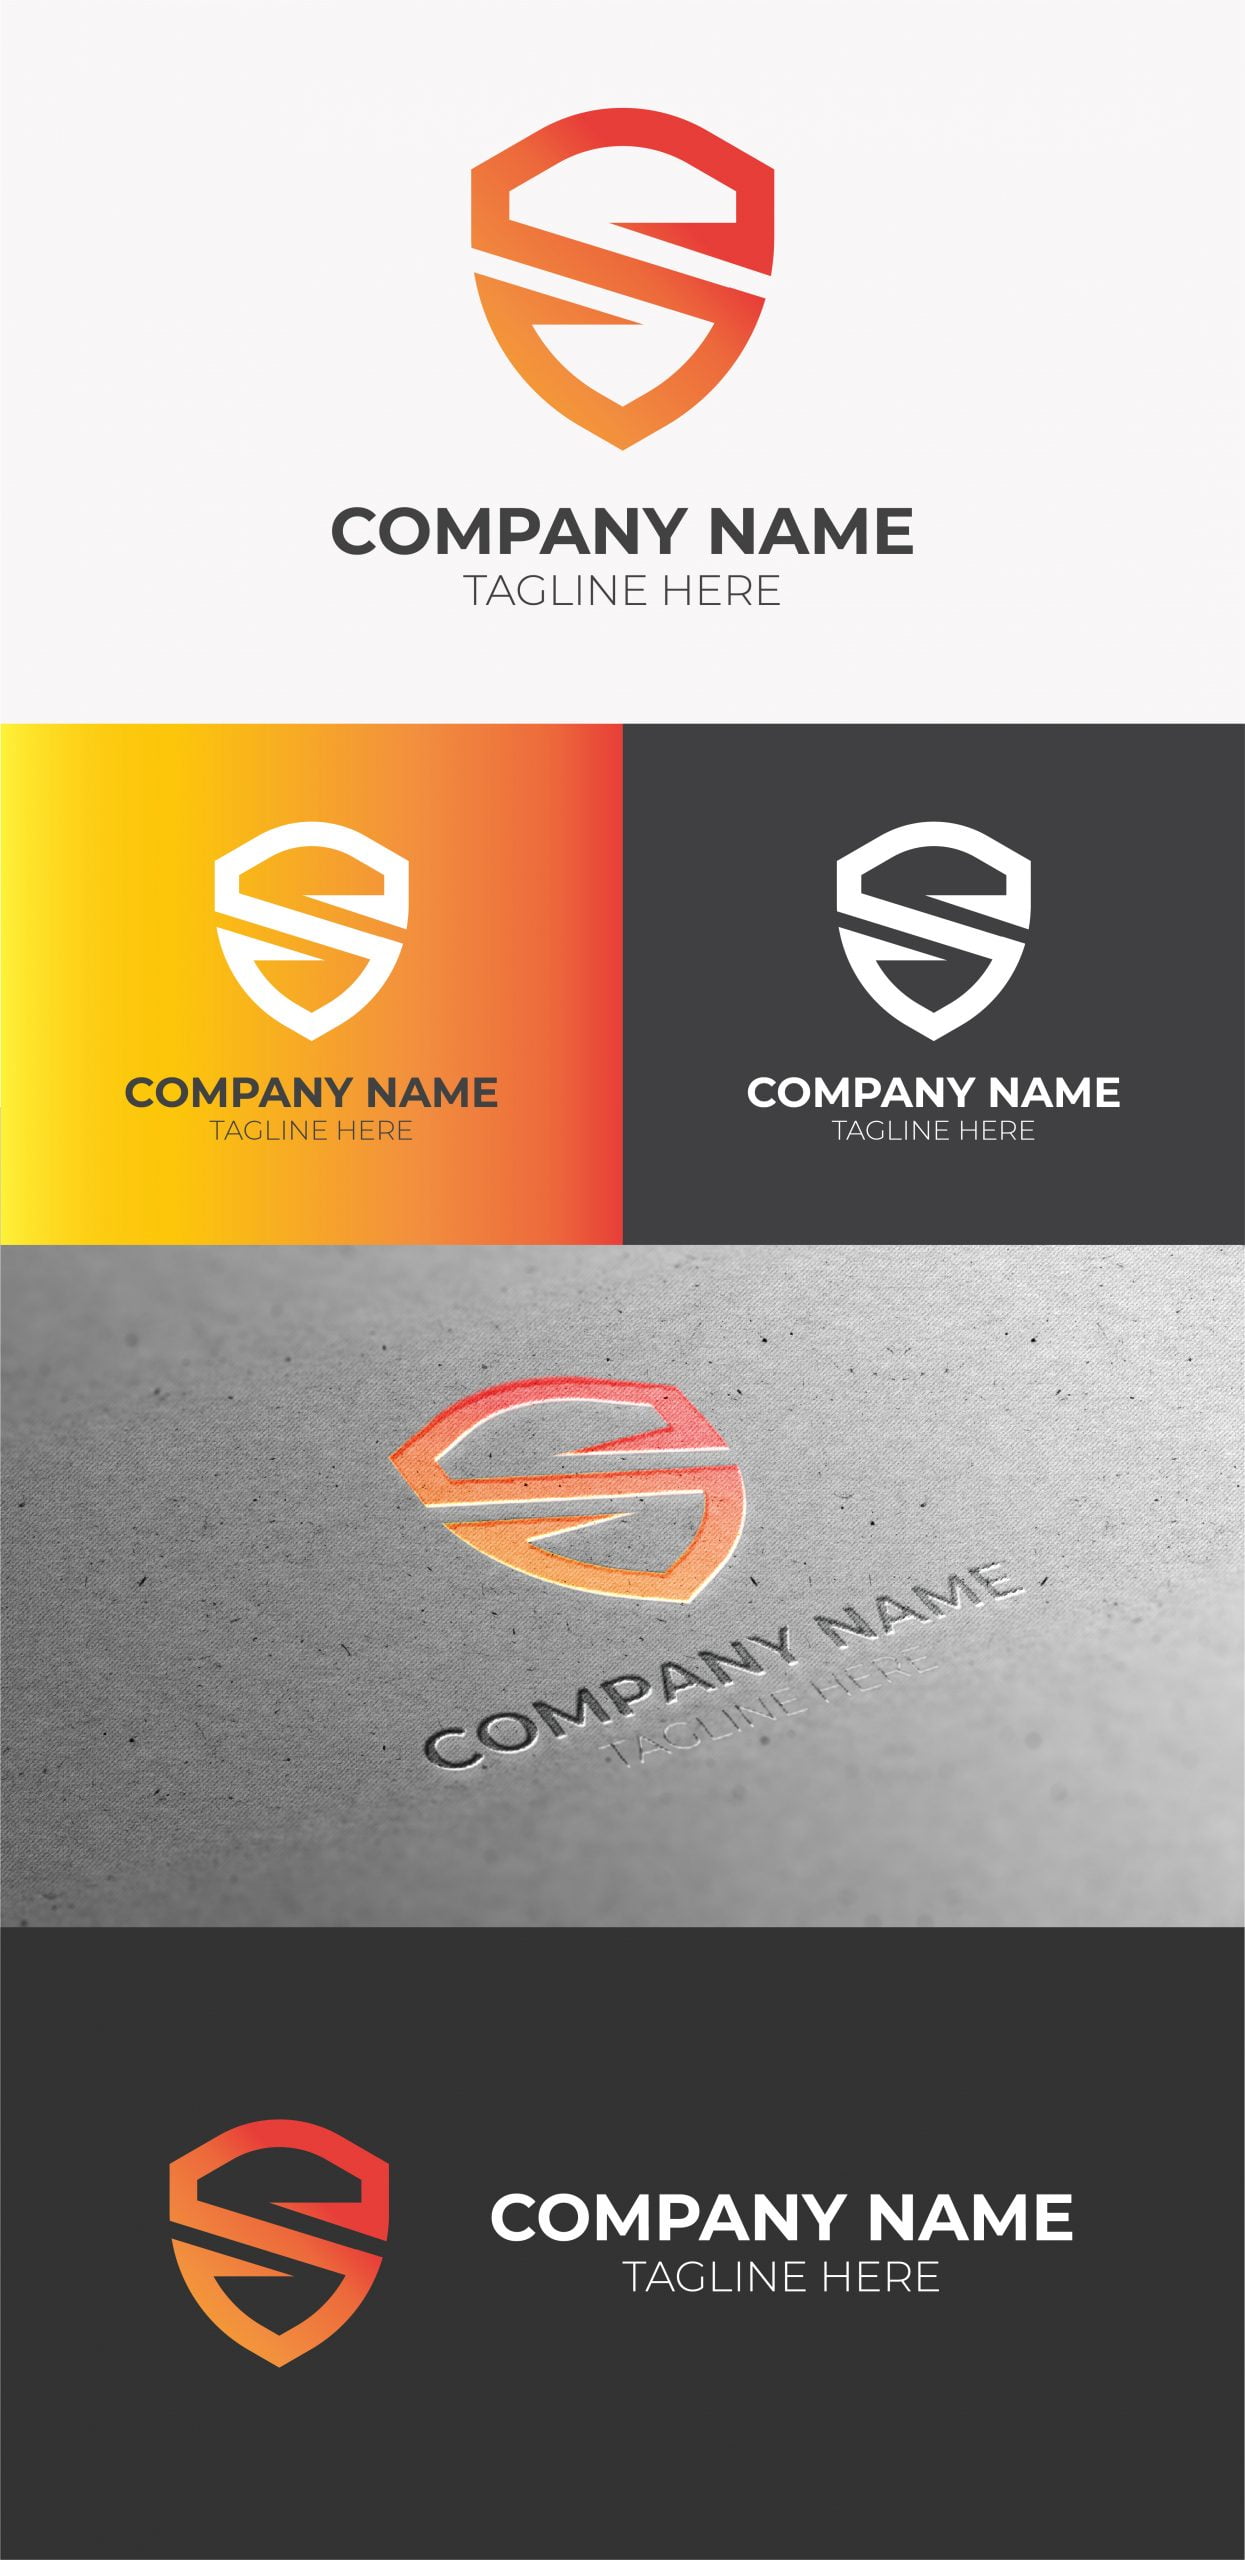 free security logo design template